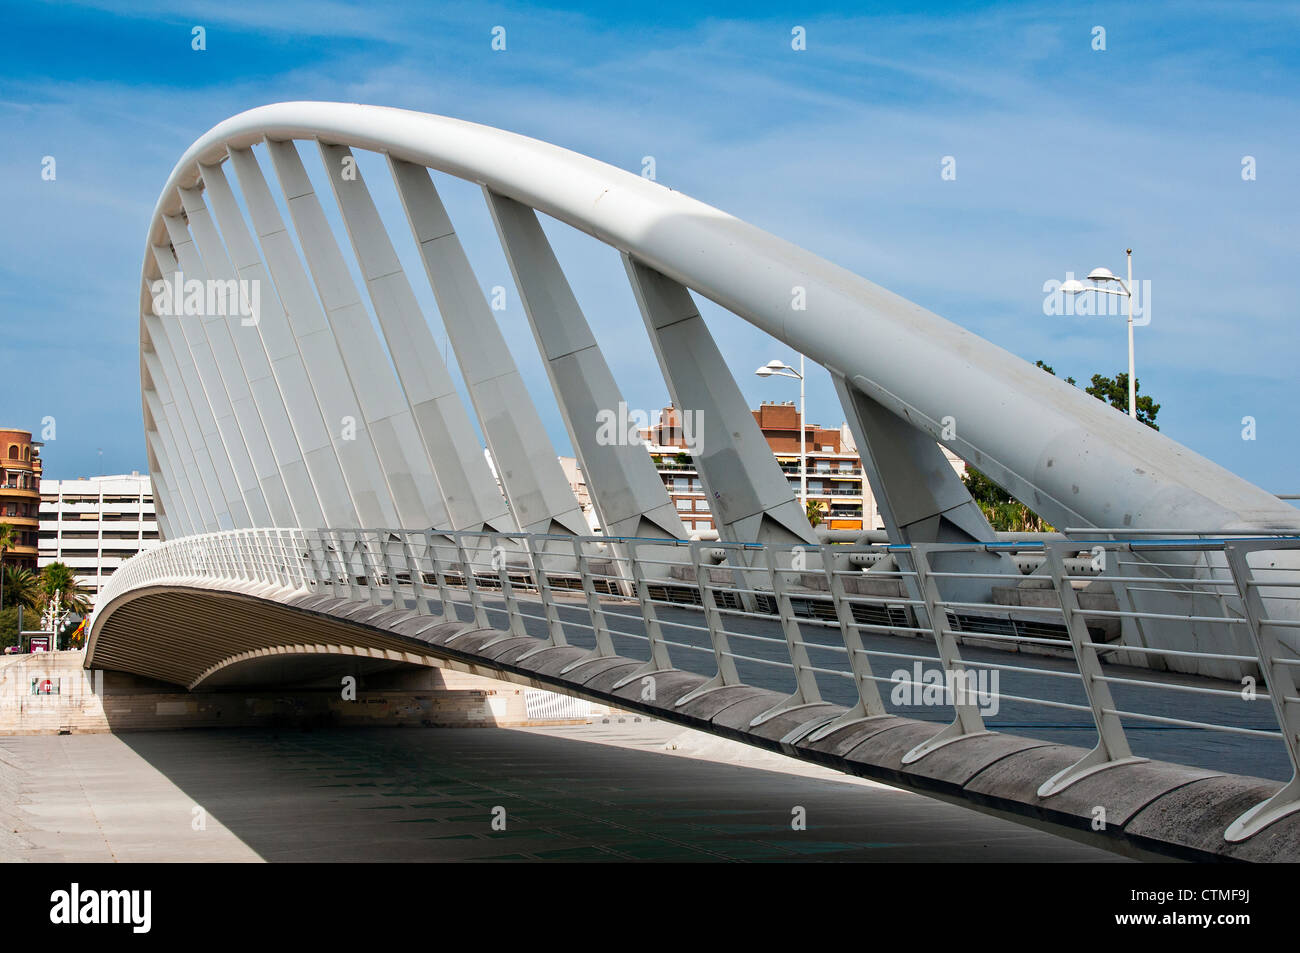 Ausstellung-Brücke oder Puente De La Exposición von Architekt Santiago Calatrava, Valencia, Spanien Stockfoto